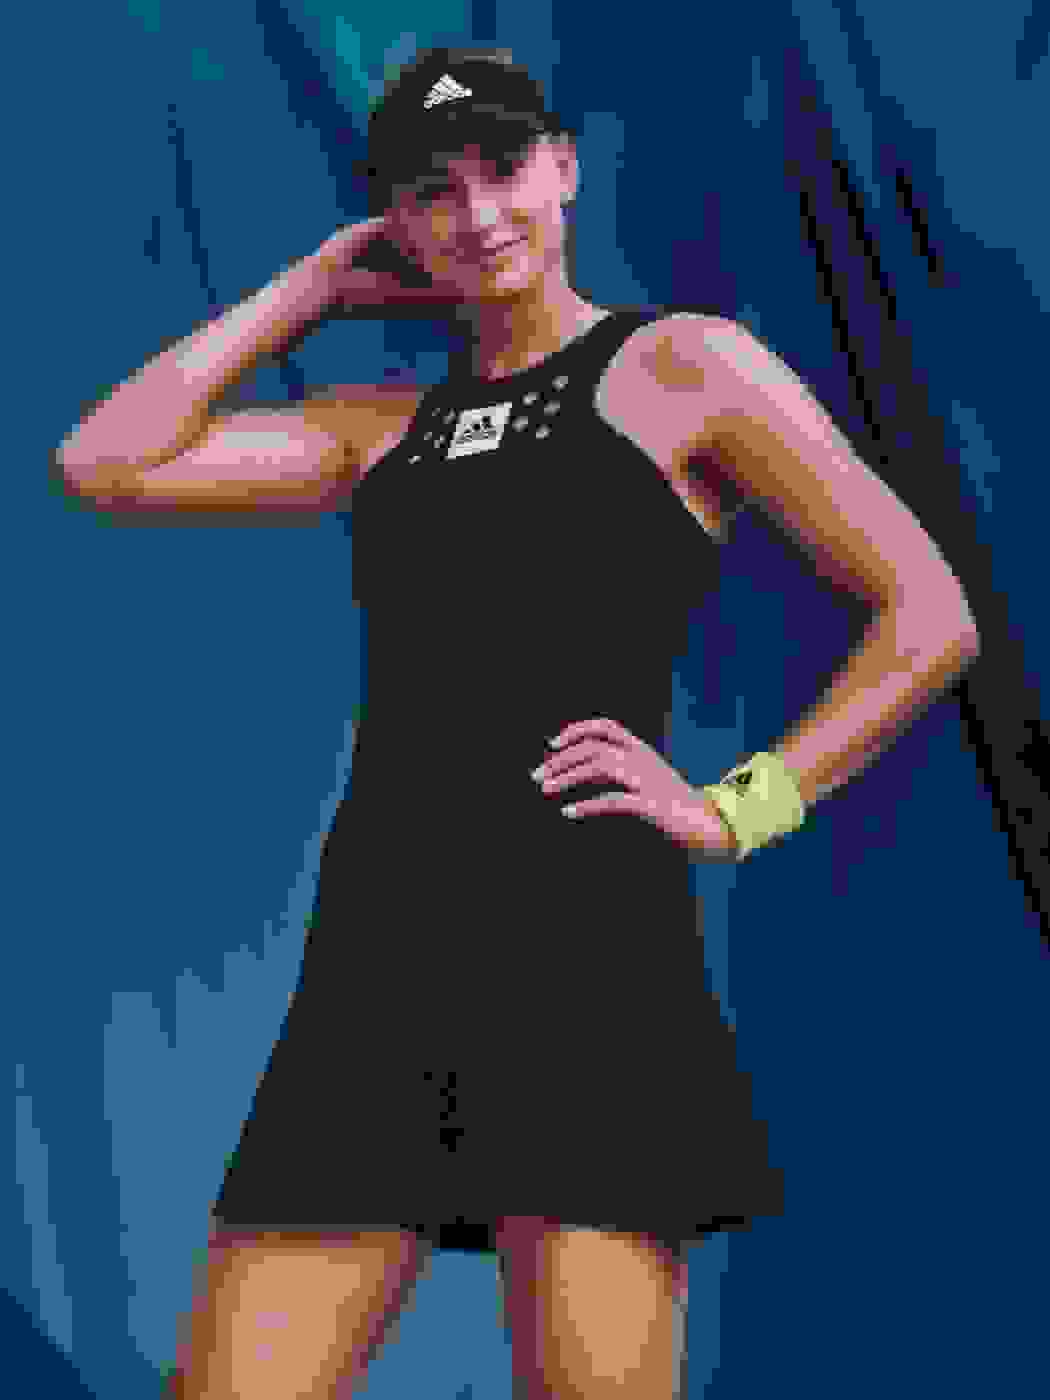 Rybakina, Elena wearing Paris tournament black dress